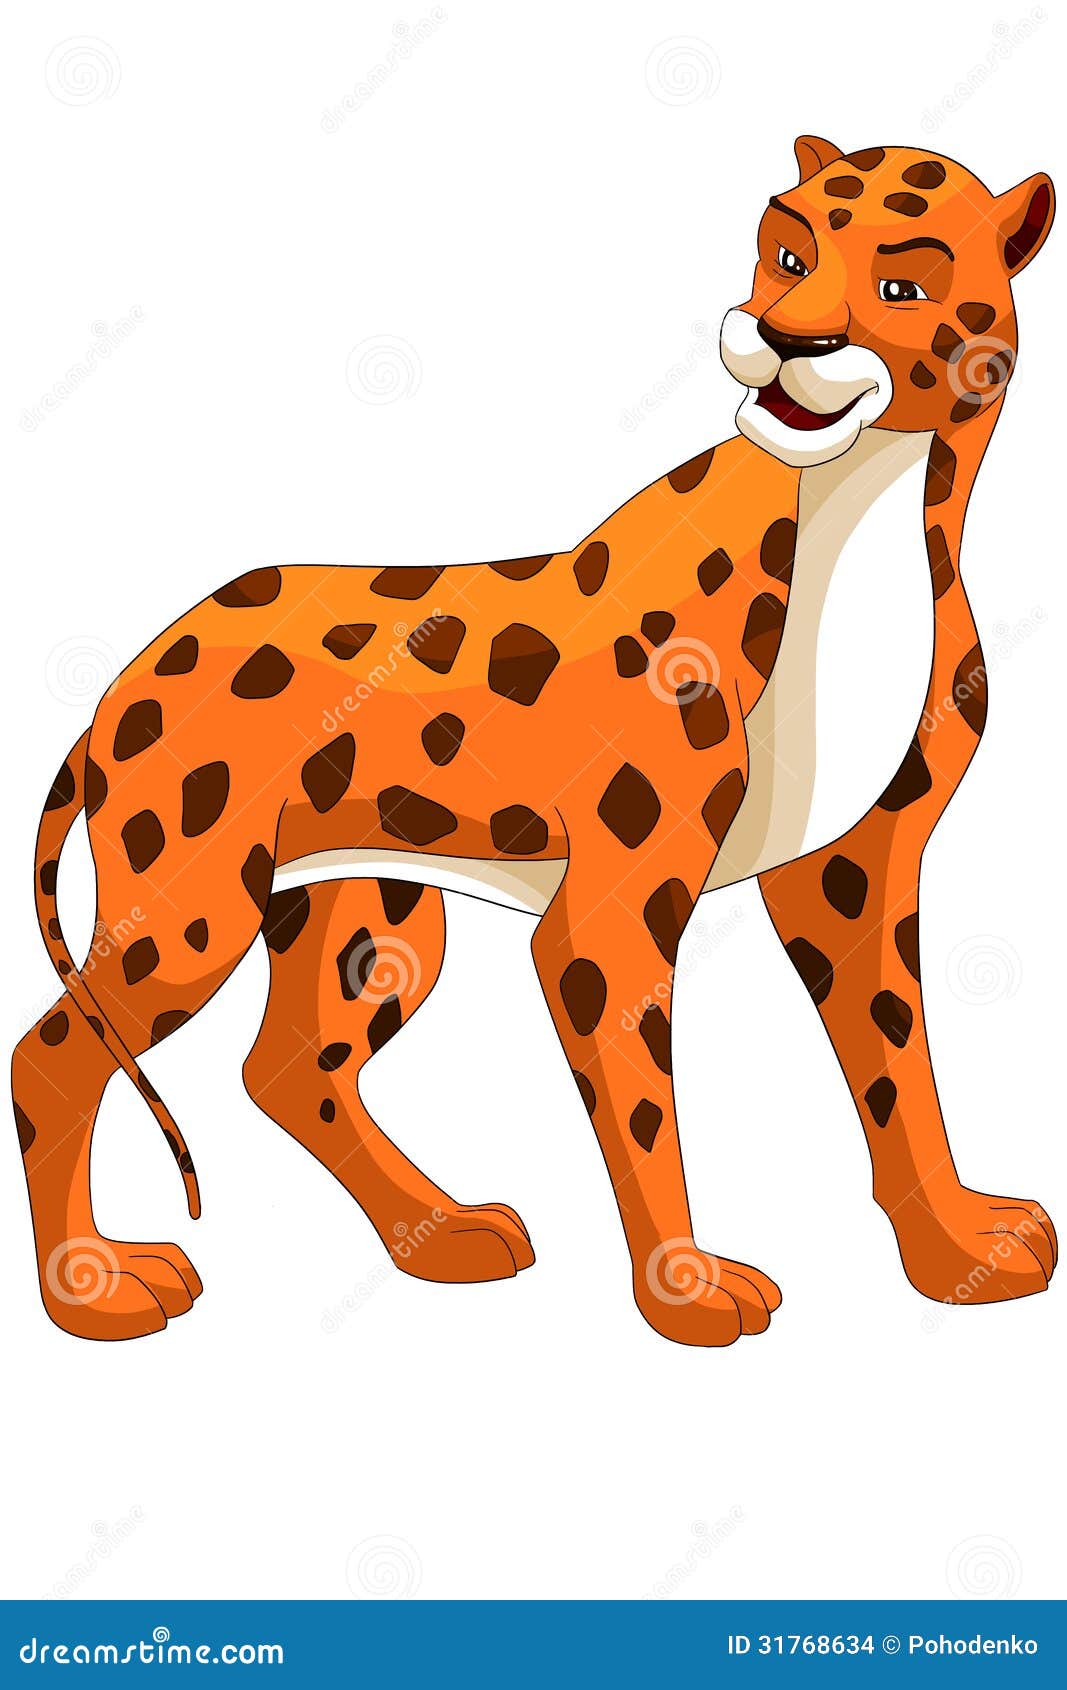 Stock Images: Animal leopard character cartoon style illustration 